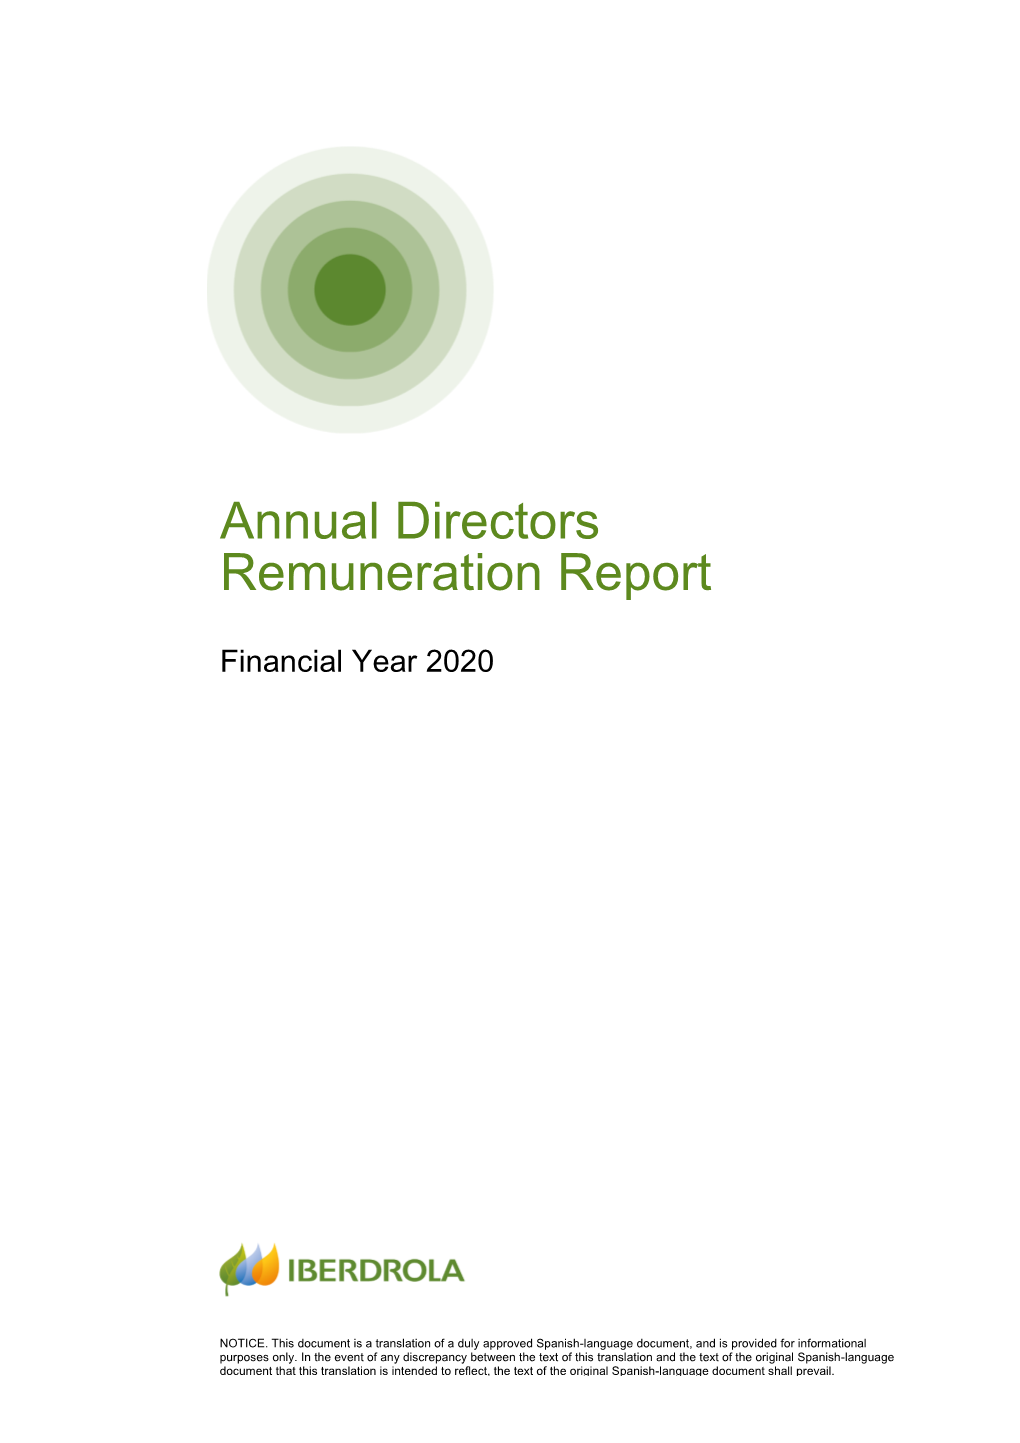 Annual Directors Remuneration Report